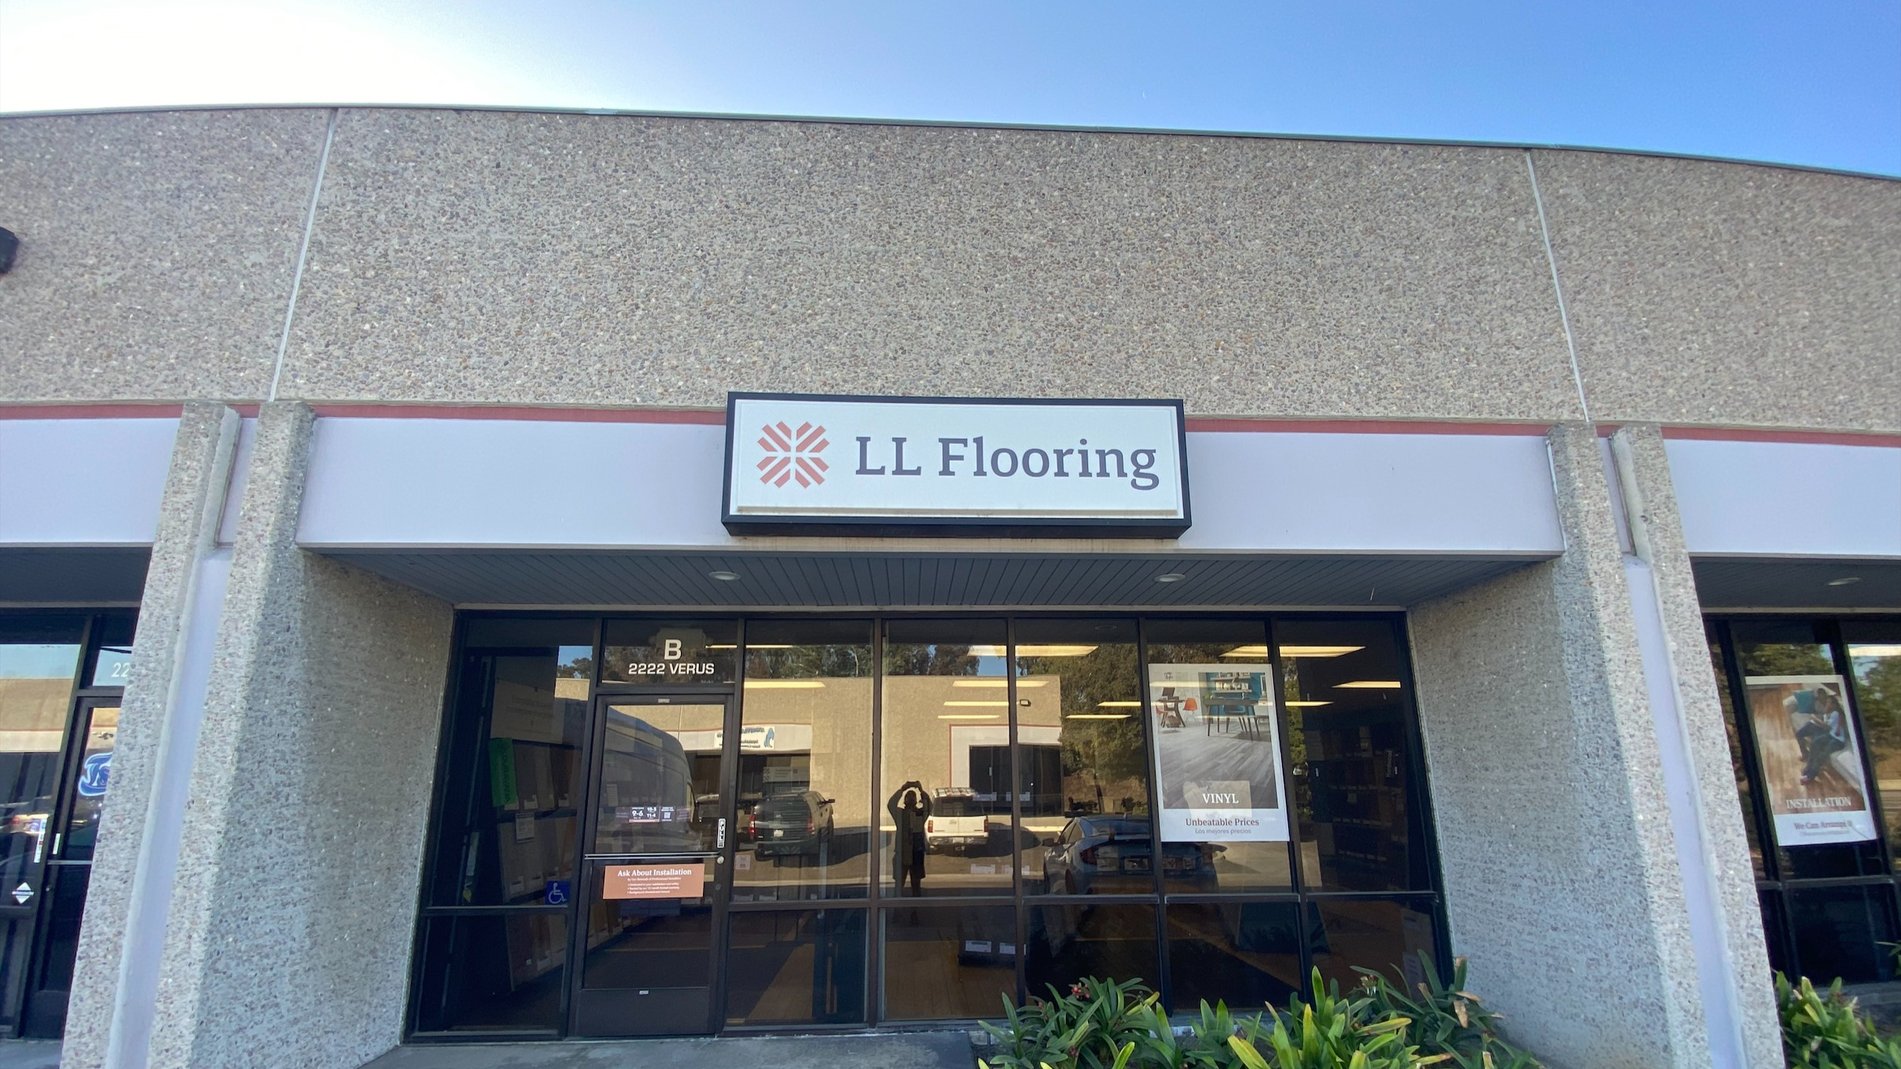 LL Flooring #1213 San Diego | 2222 Verus Street | Storefront